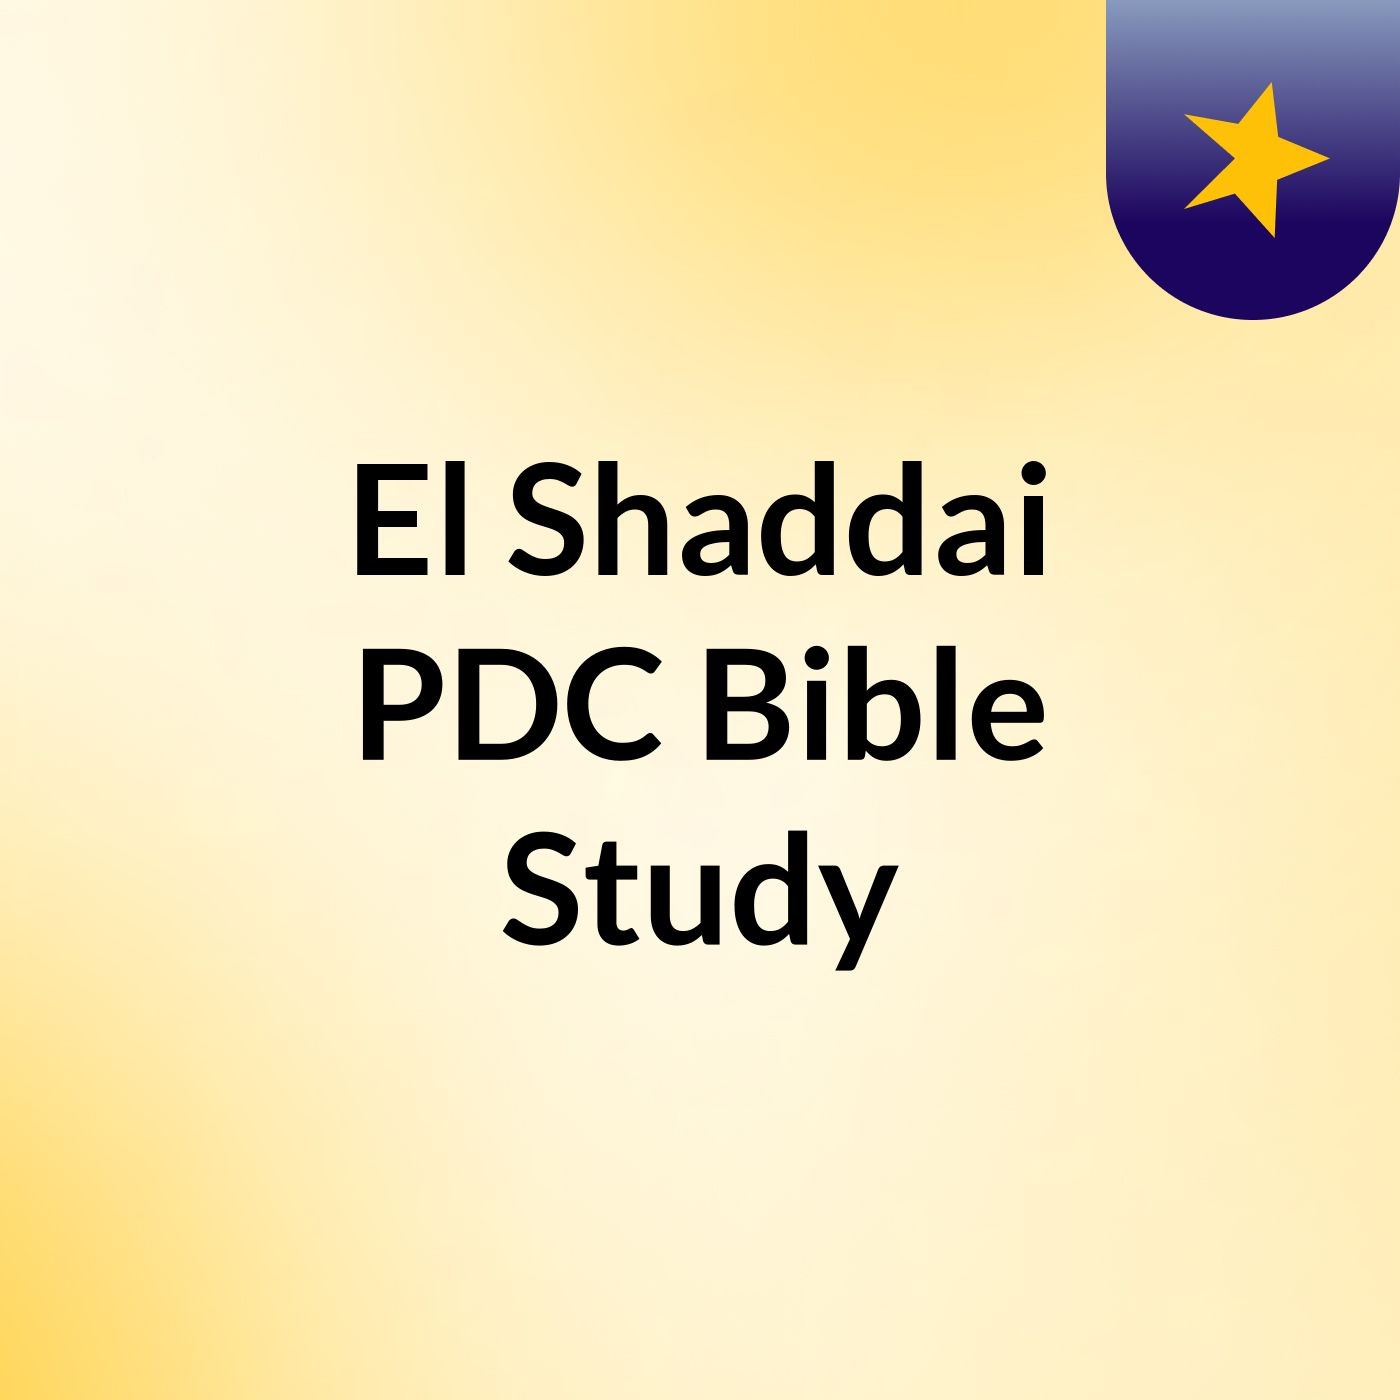 Episode 1 - El Shaddai PDC Bible Study